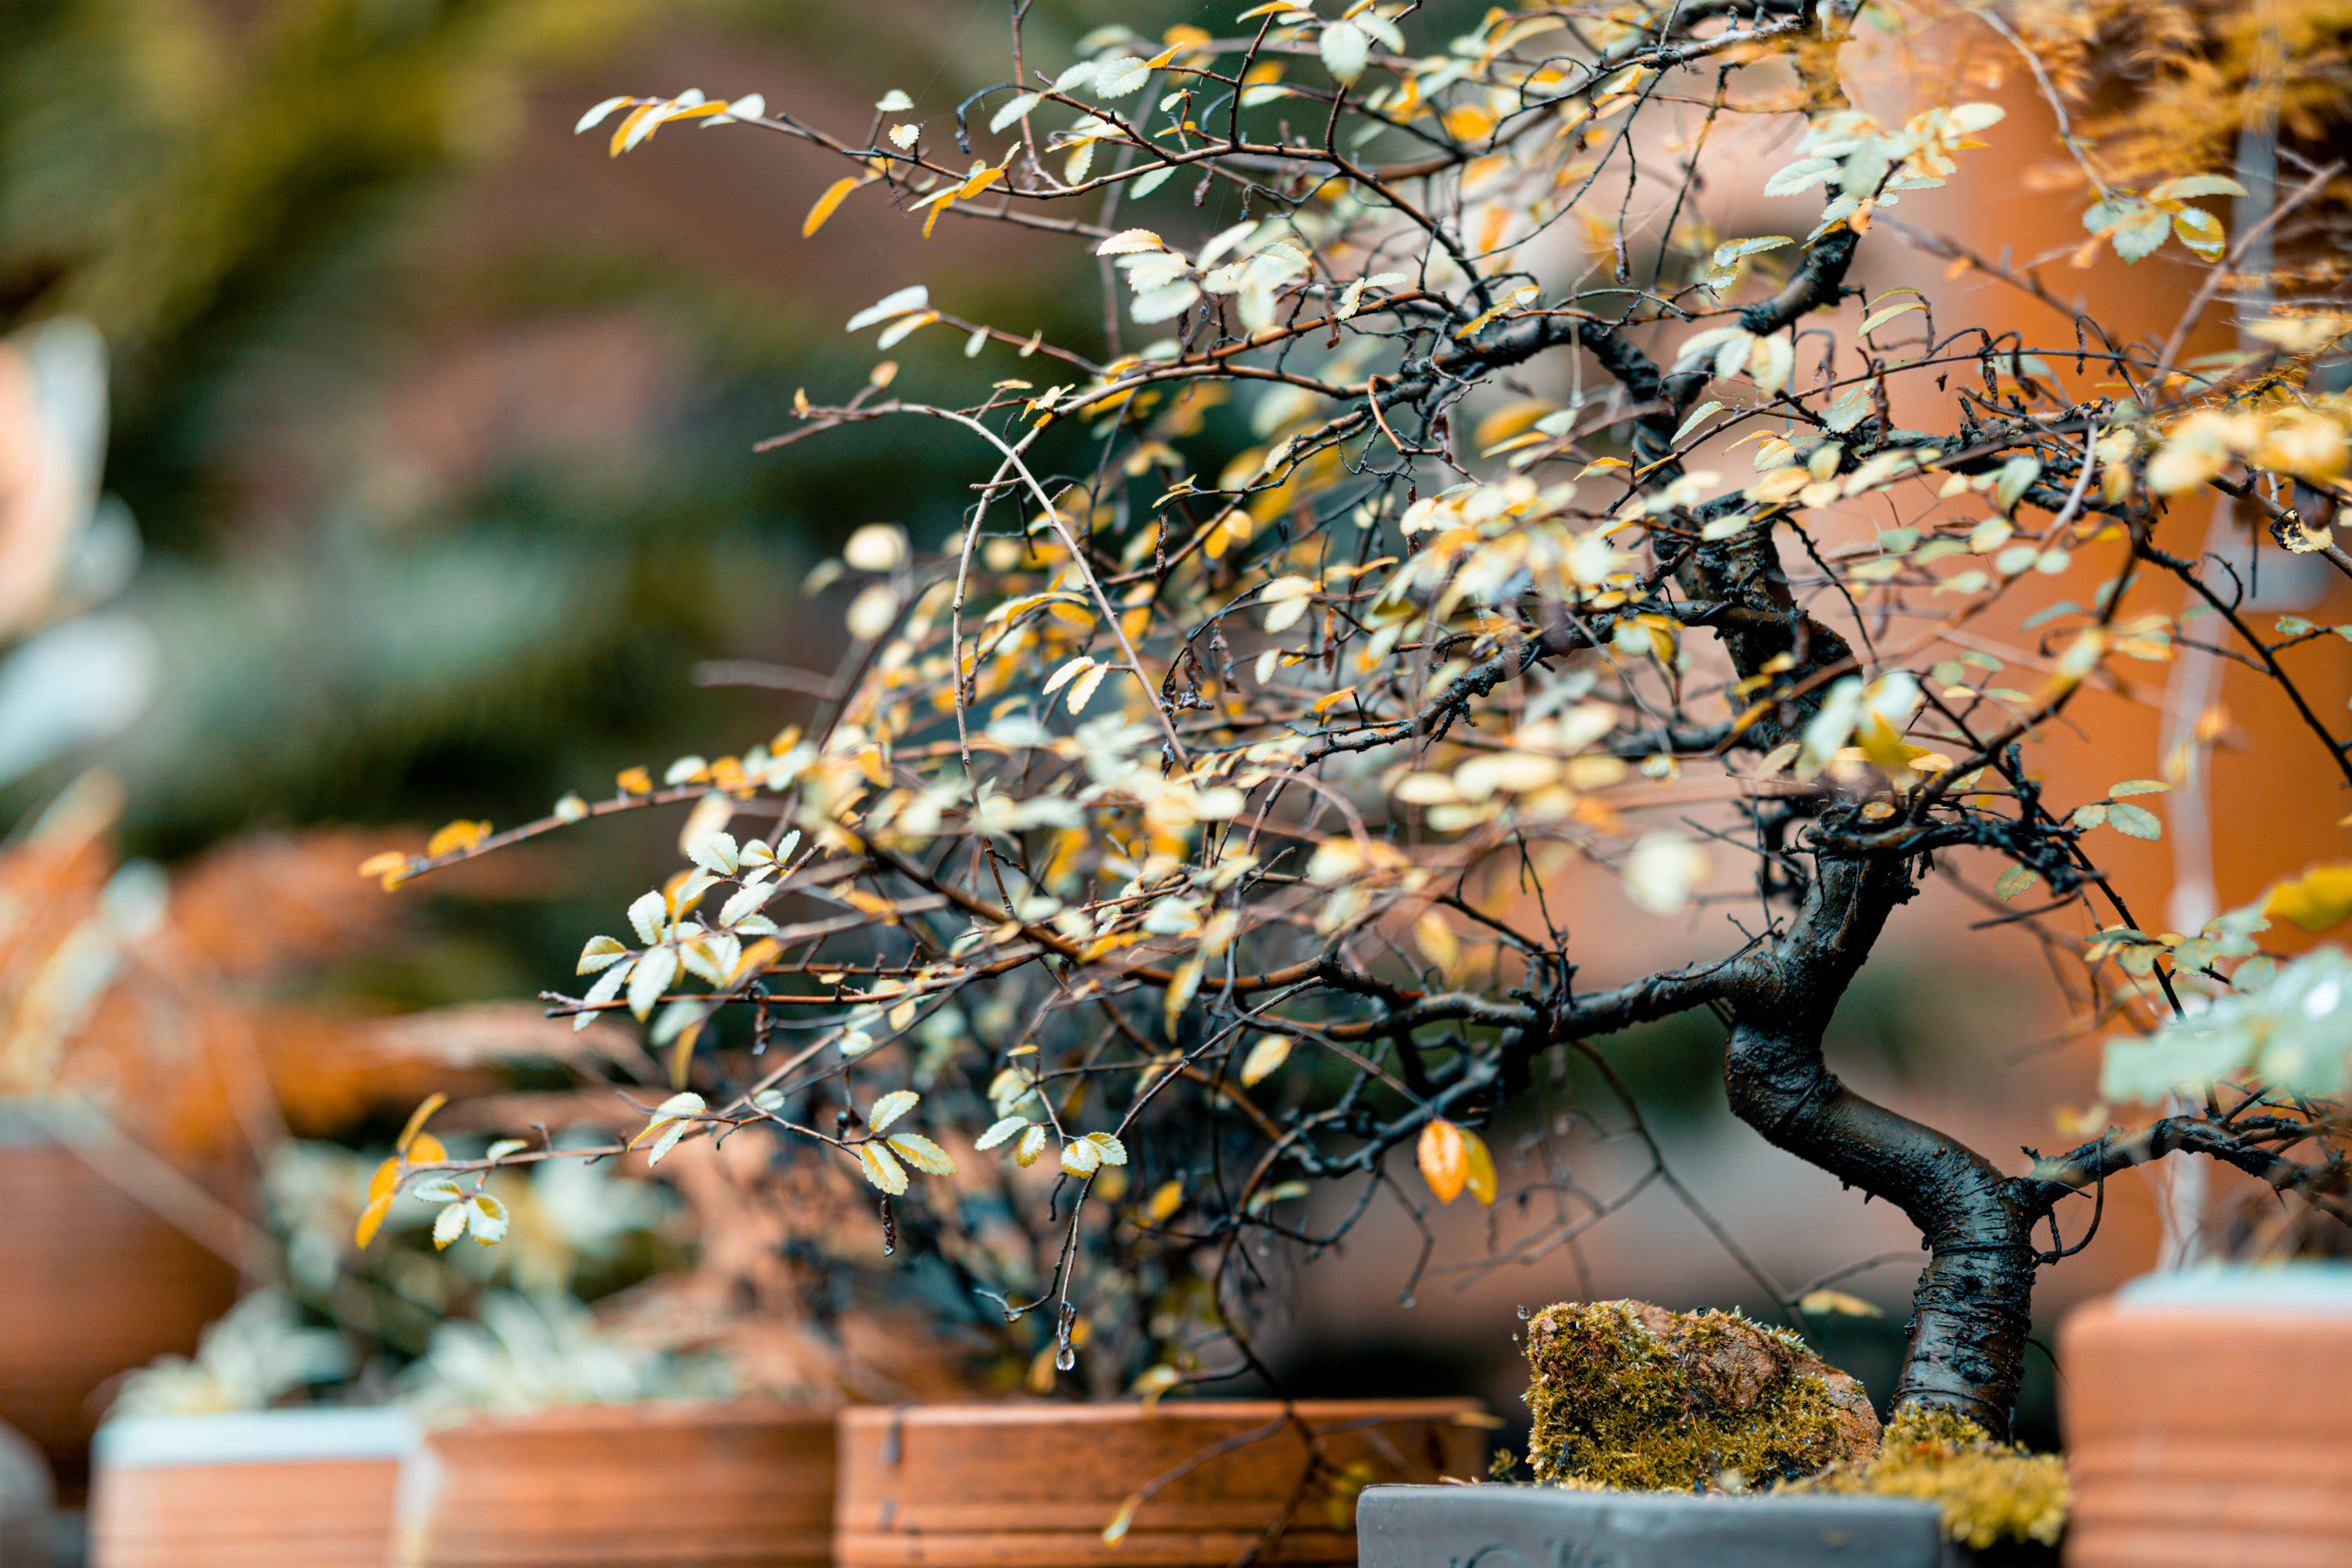 Bonzai plant stock photo. Image of bonsai, decoration - 23863222